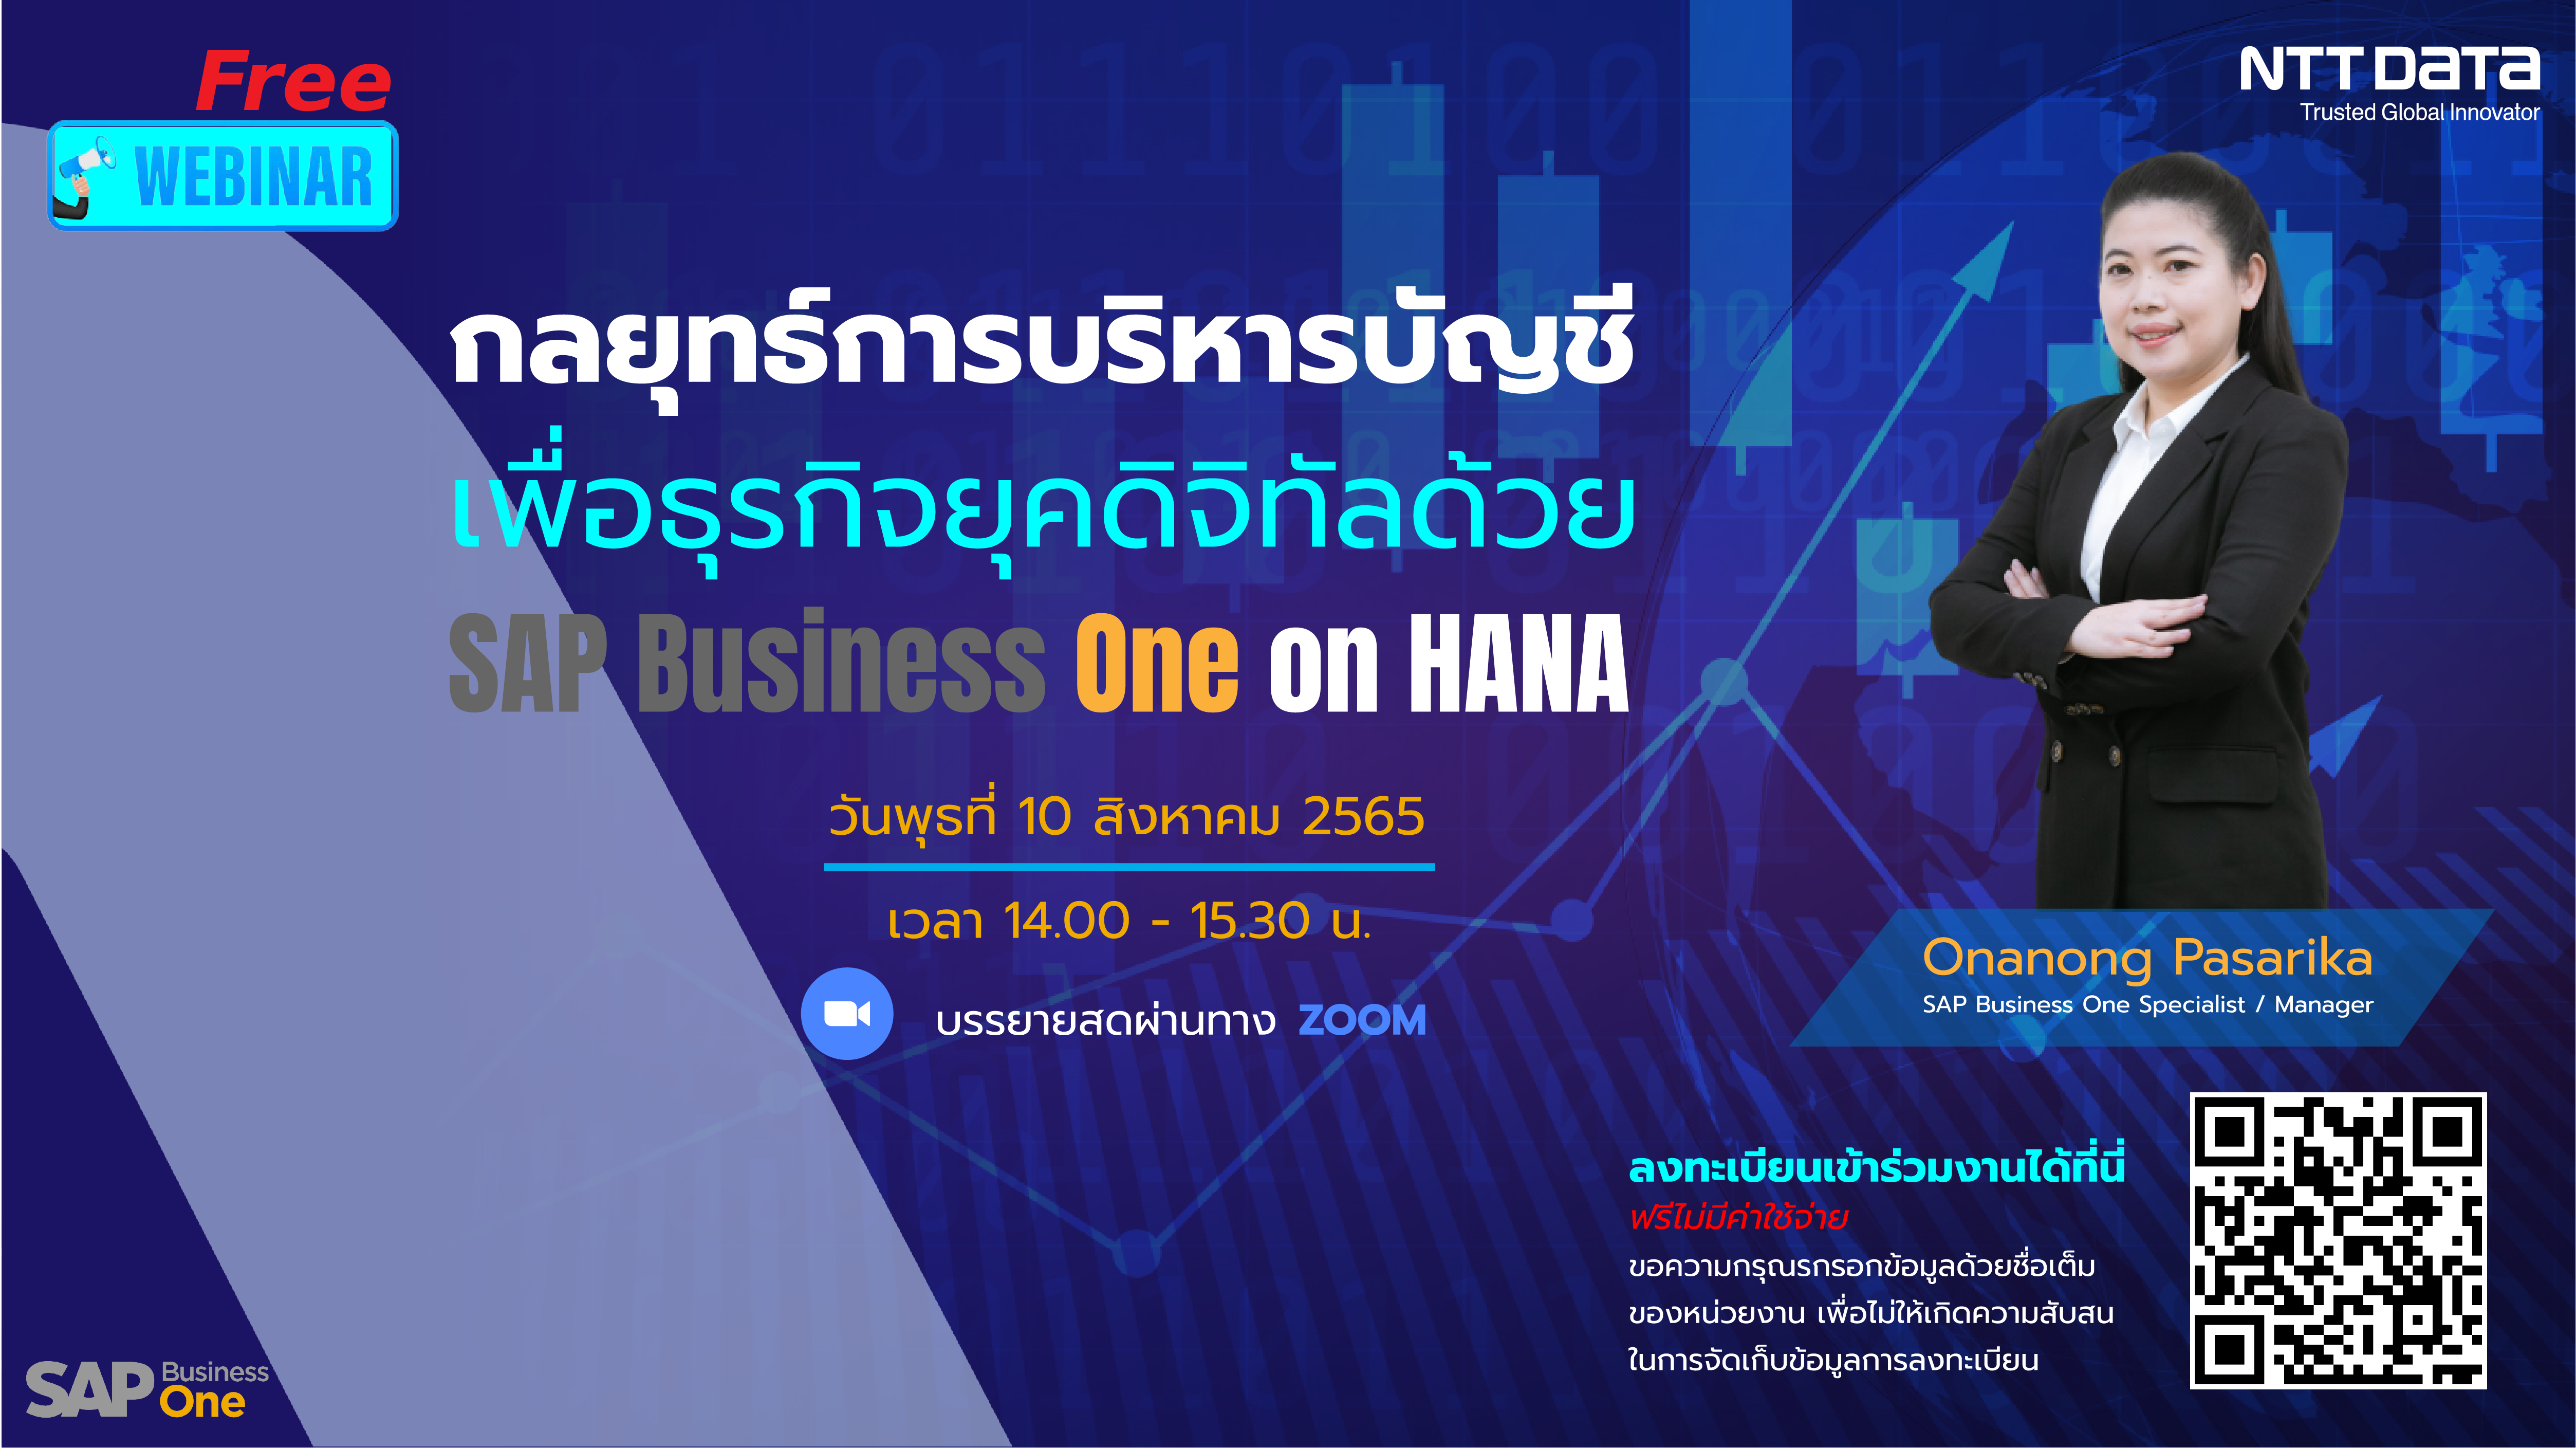 NTT DATA Business Solutions (Thailand) Ltd. เชิญร่วมงานสัมมนาออนไลน์ฟรี "กลยุทธ์การบริหารบัญชีเพื่อธุรกิจยุคดิจิทัลด้วย SAP Business One on HANA"